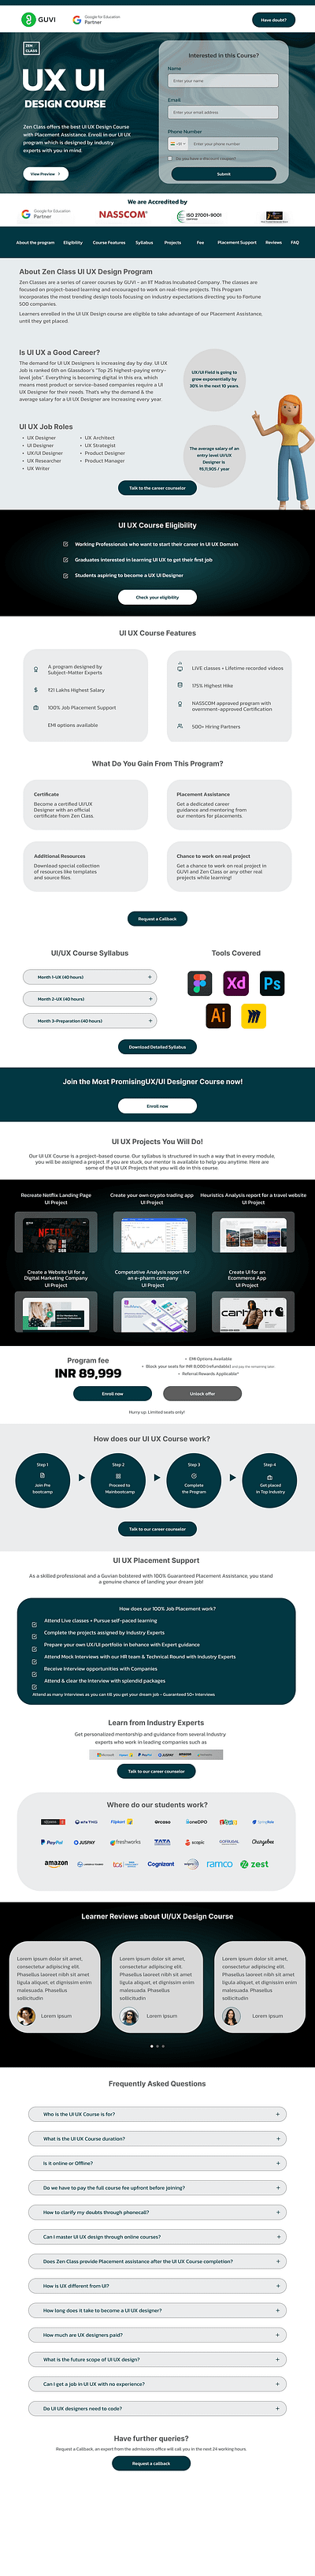 Guvi Website - Complete Redesign animation branding graphic design ui website